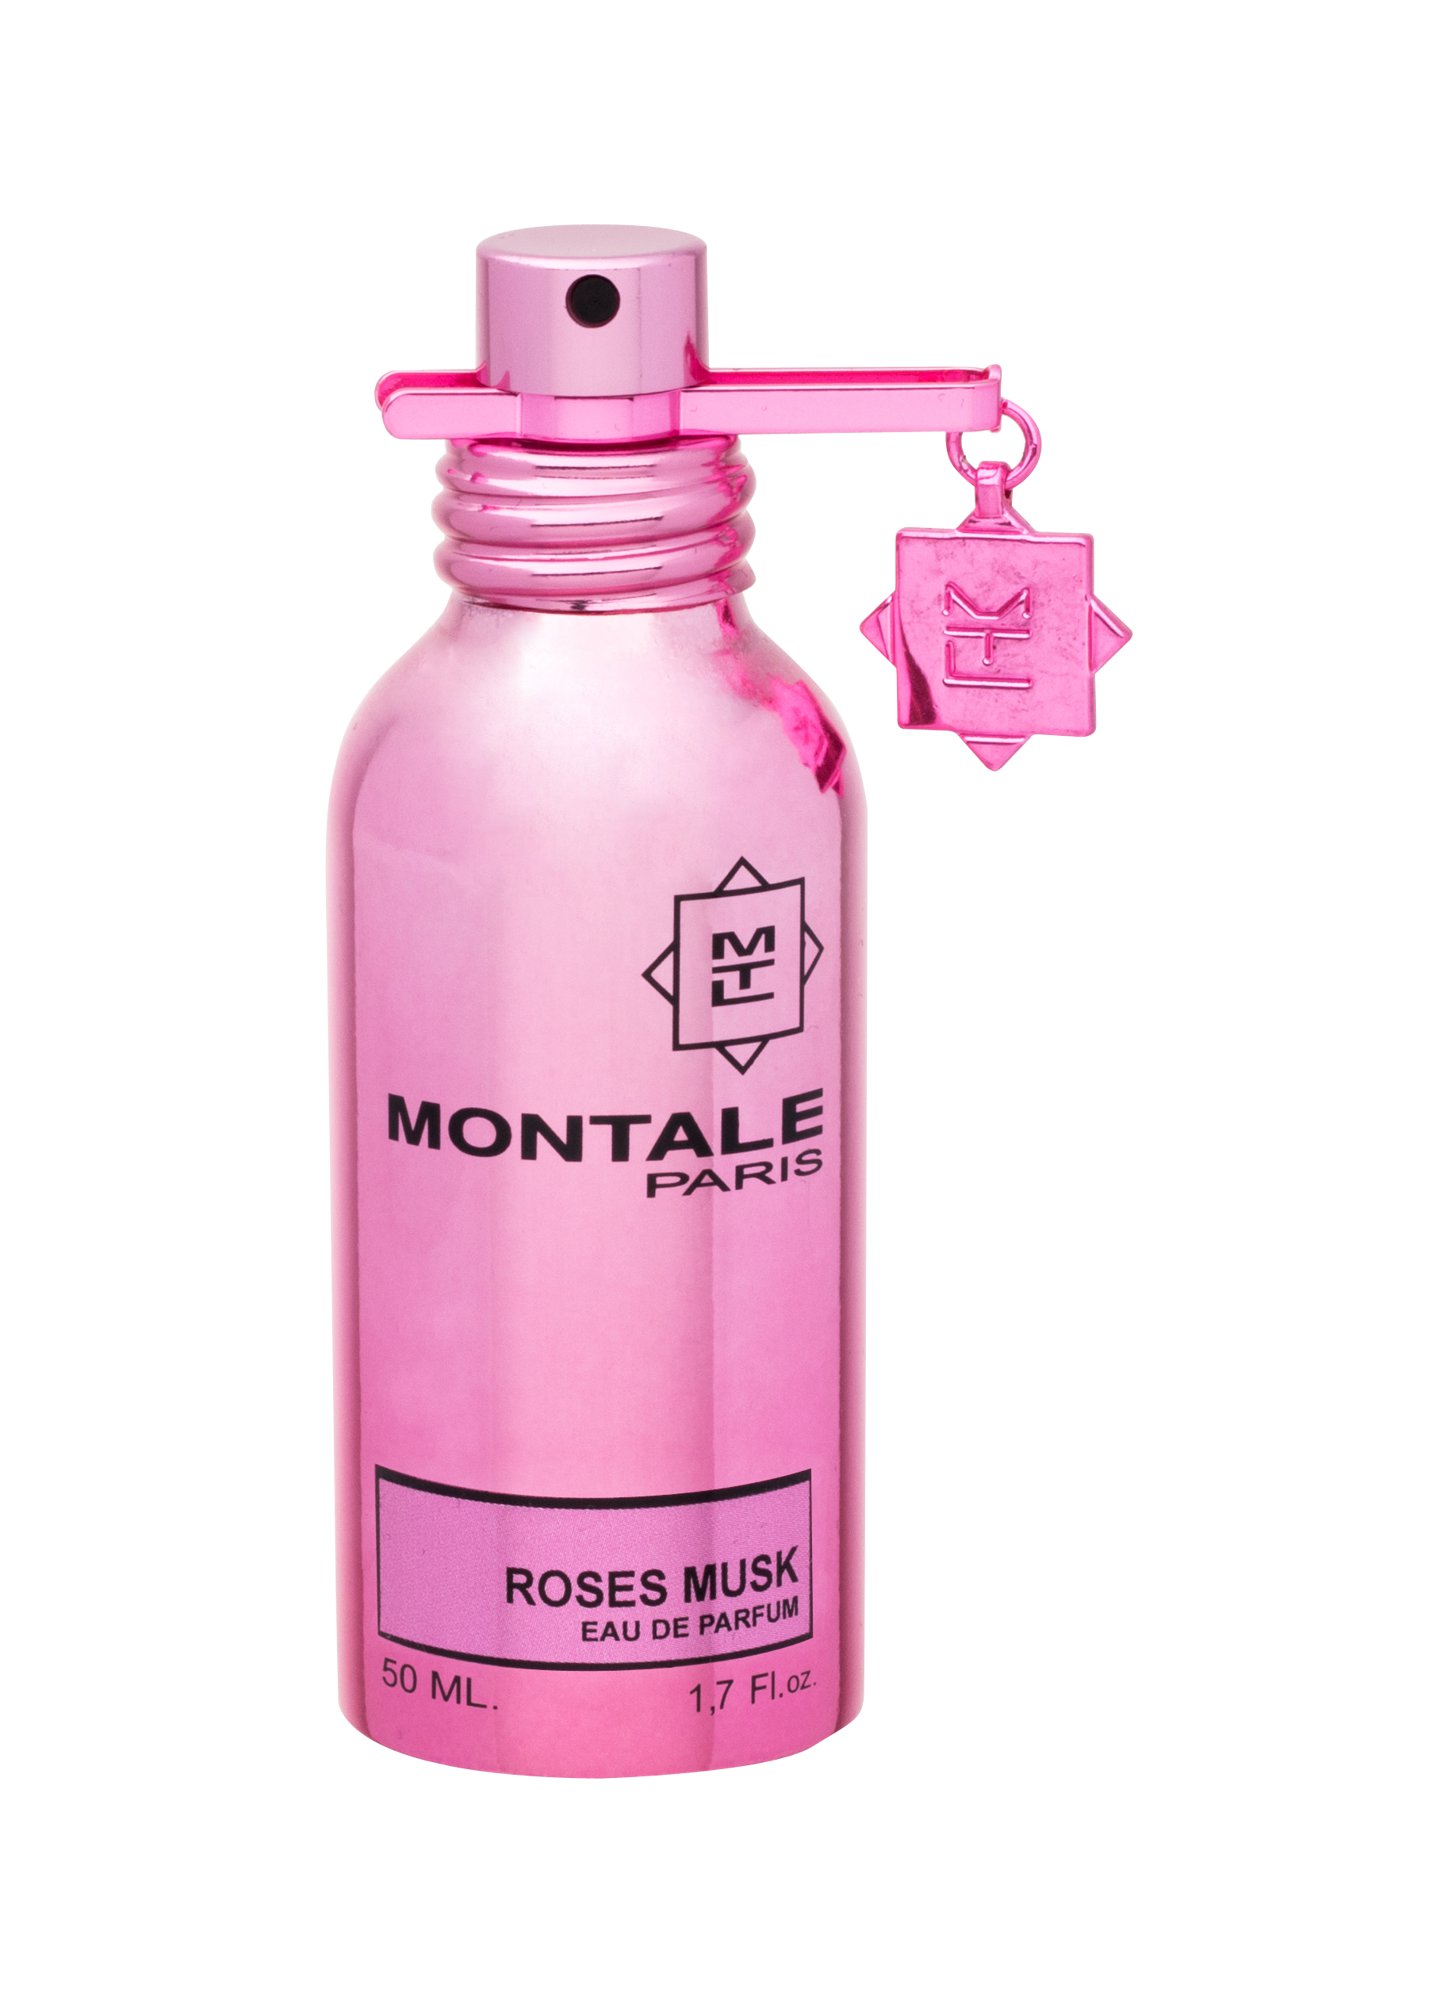 Montale Paris Roses Musk, EDP 50ml